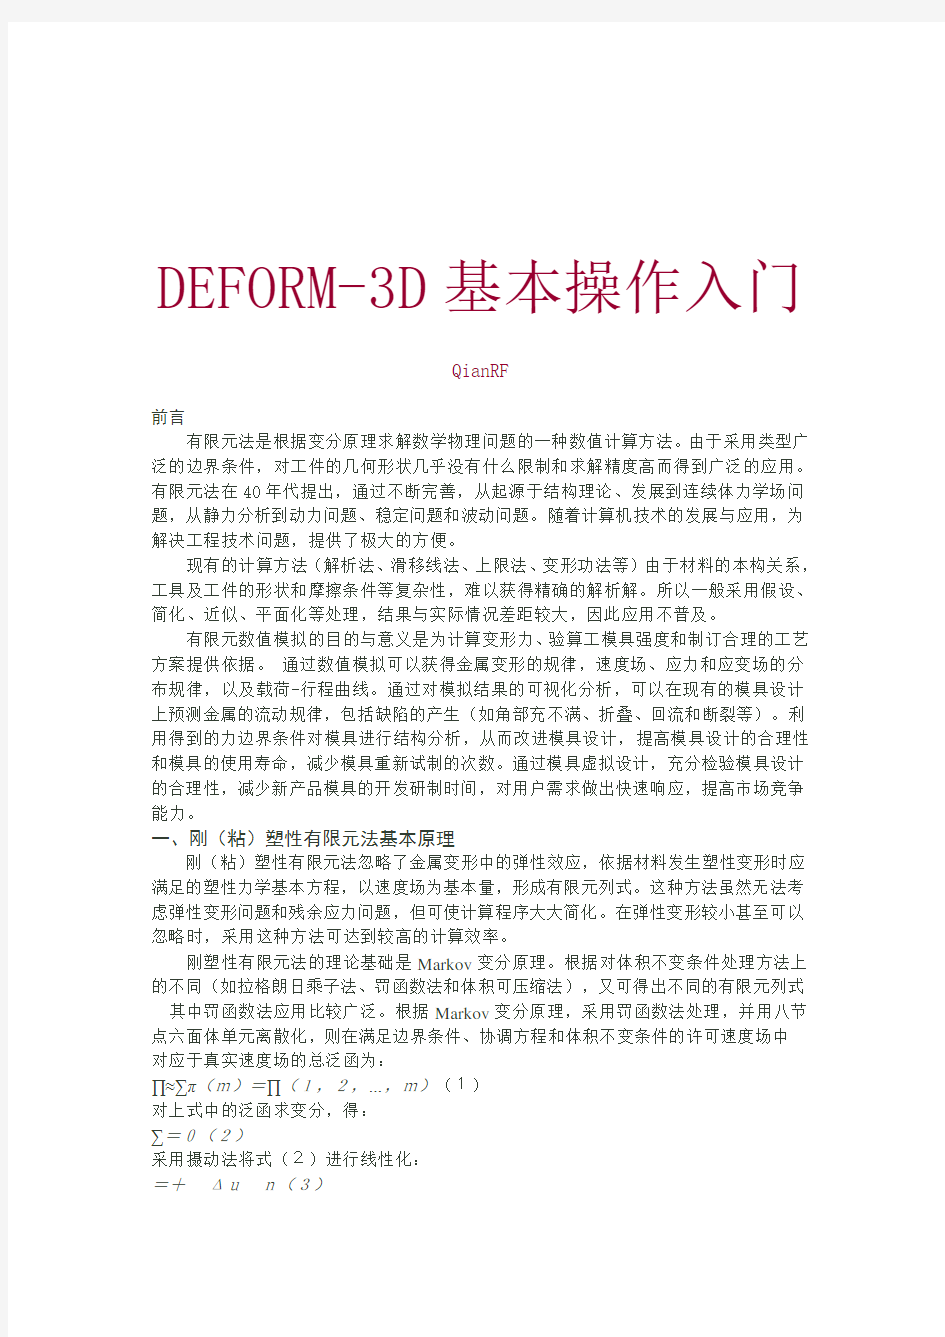 DEFORM-3D基本操作入门